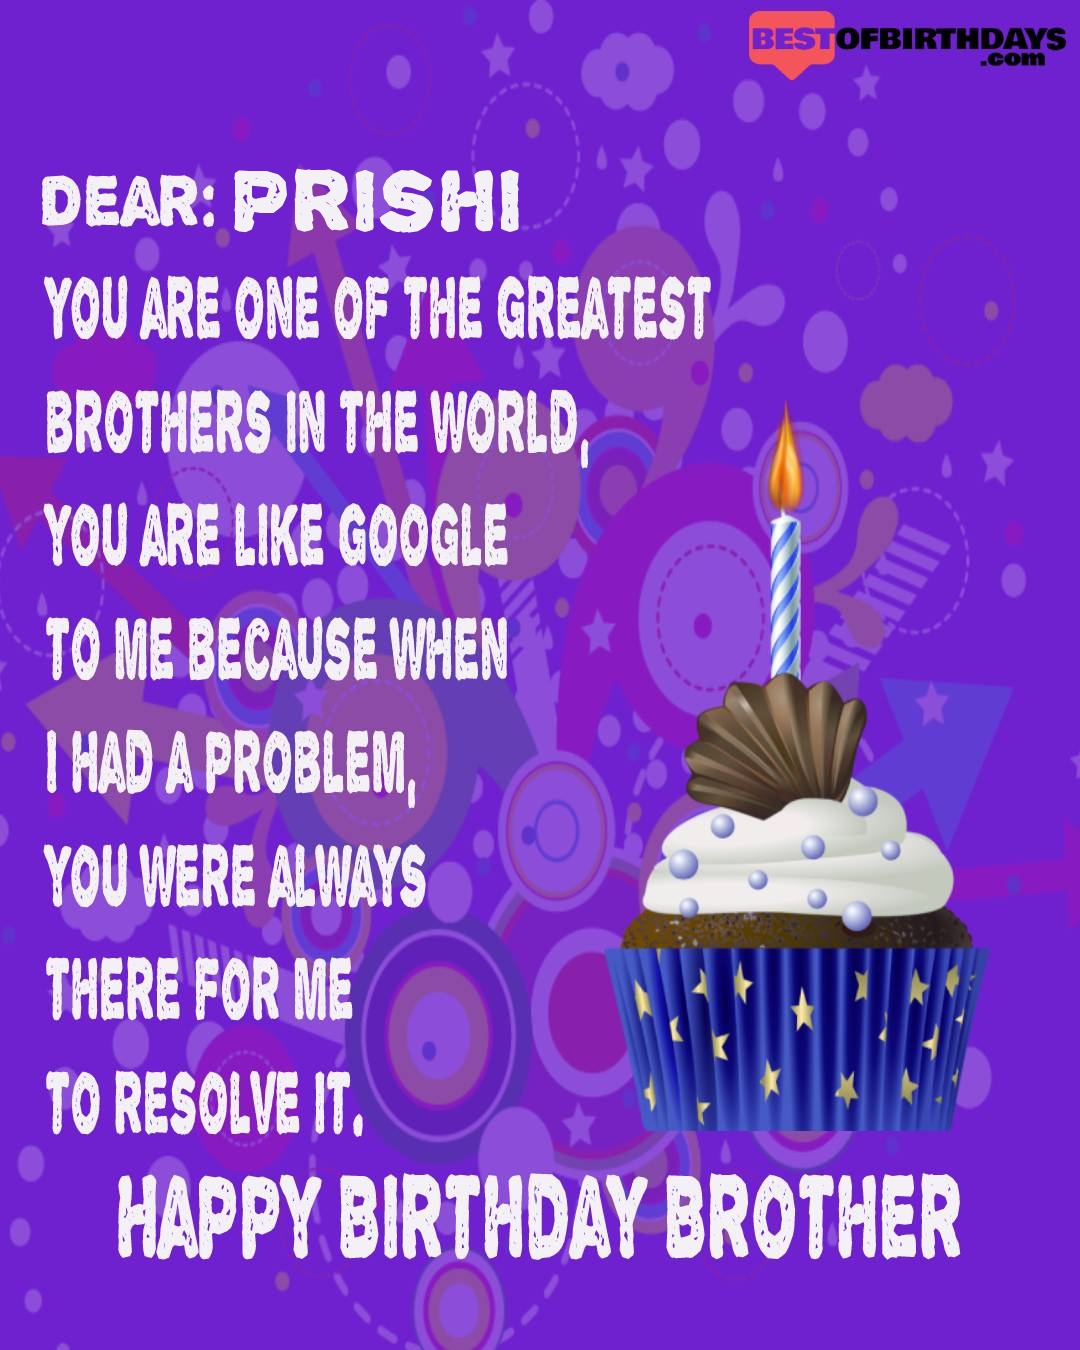 Happy birthday prishi bhai brother bro